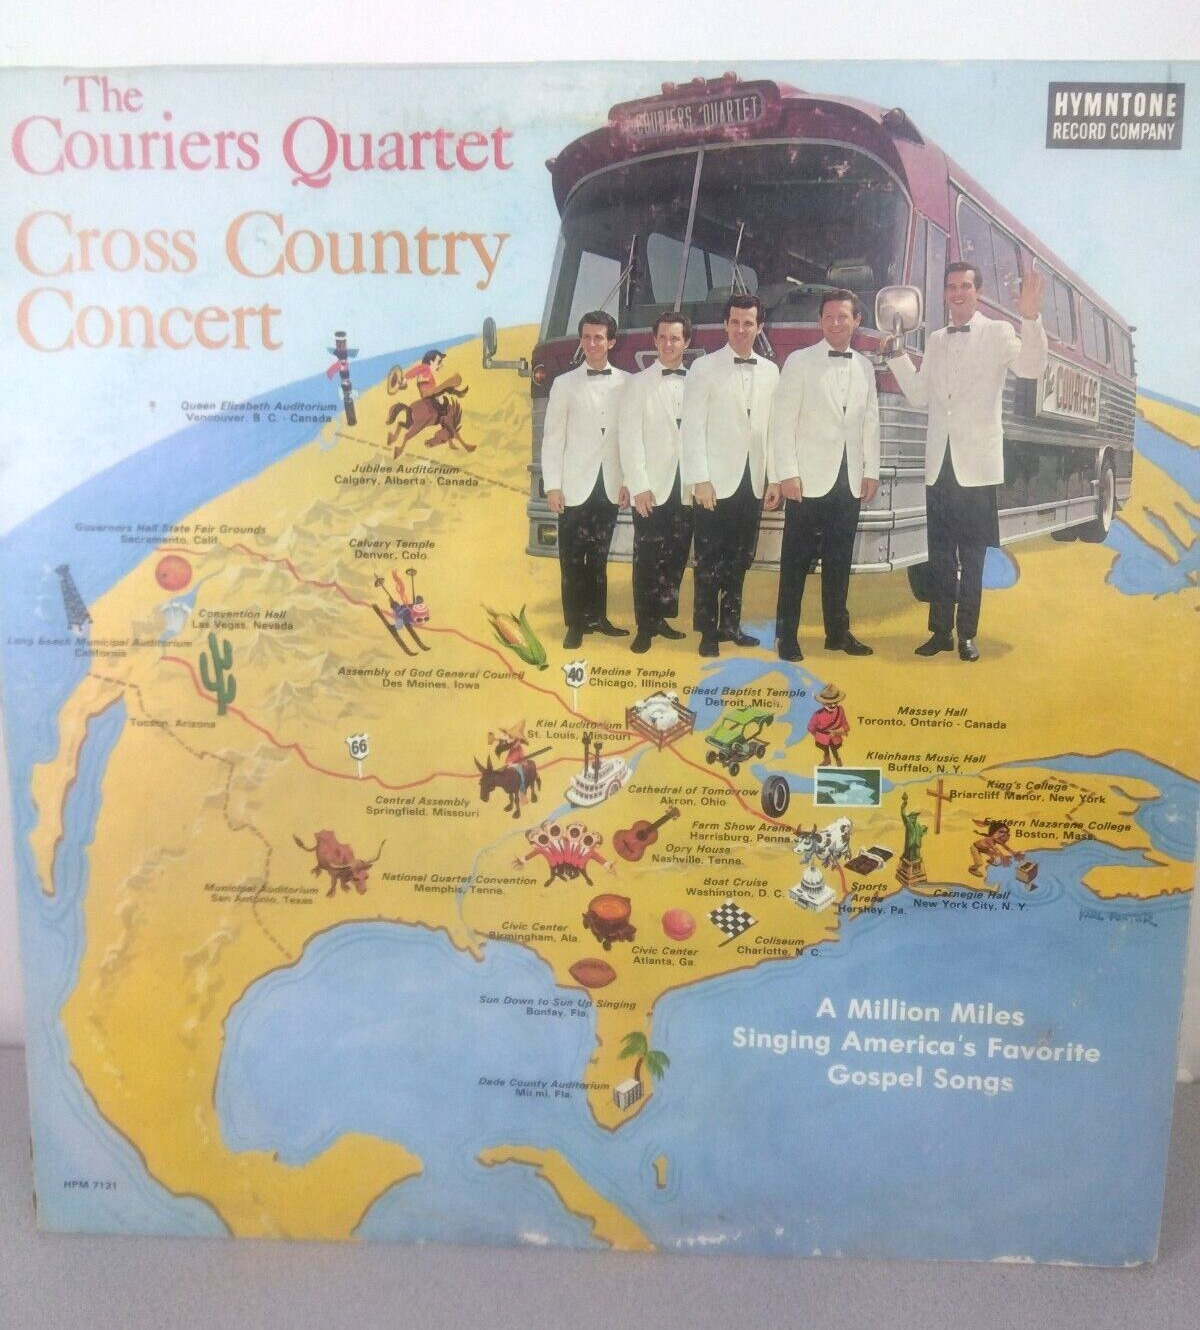 The Couriers Quartet Cross Country Concert Gospel Record Album - 1966     (LR51)